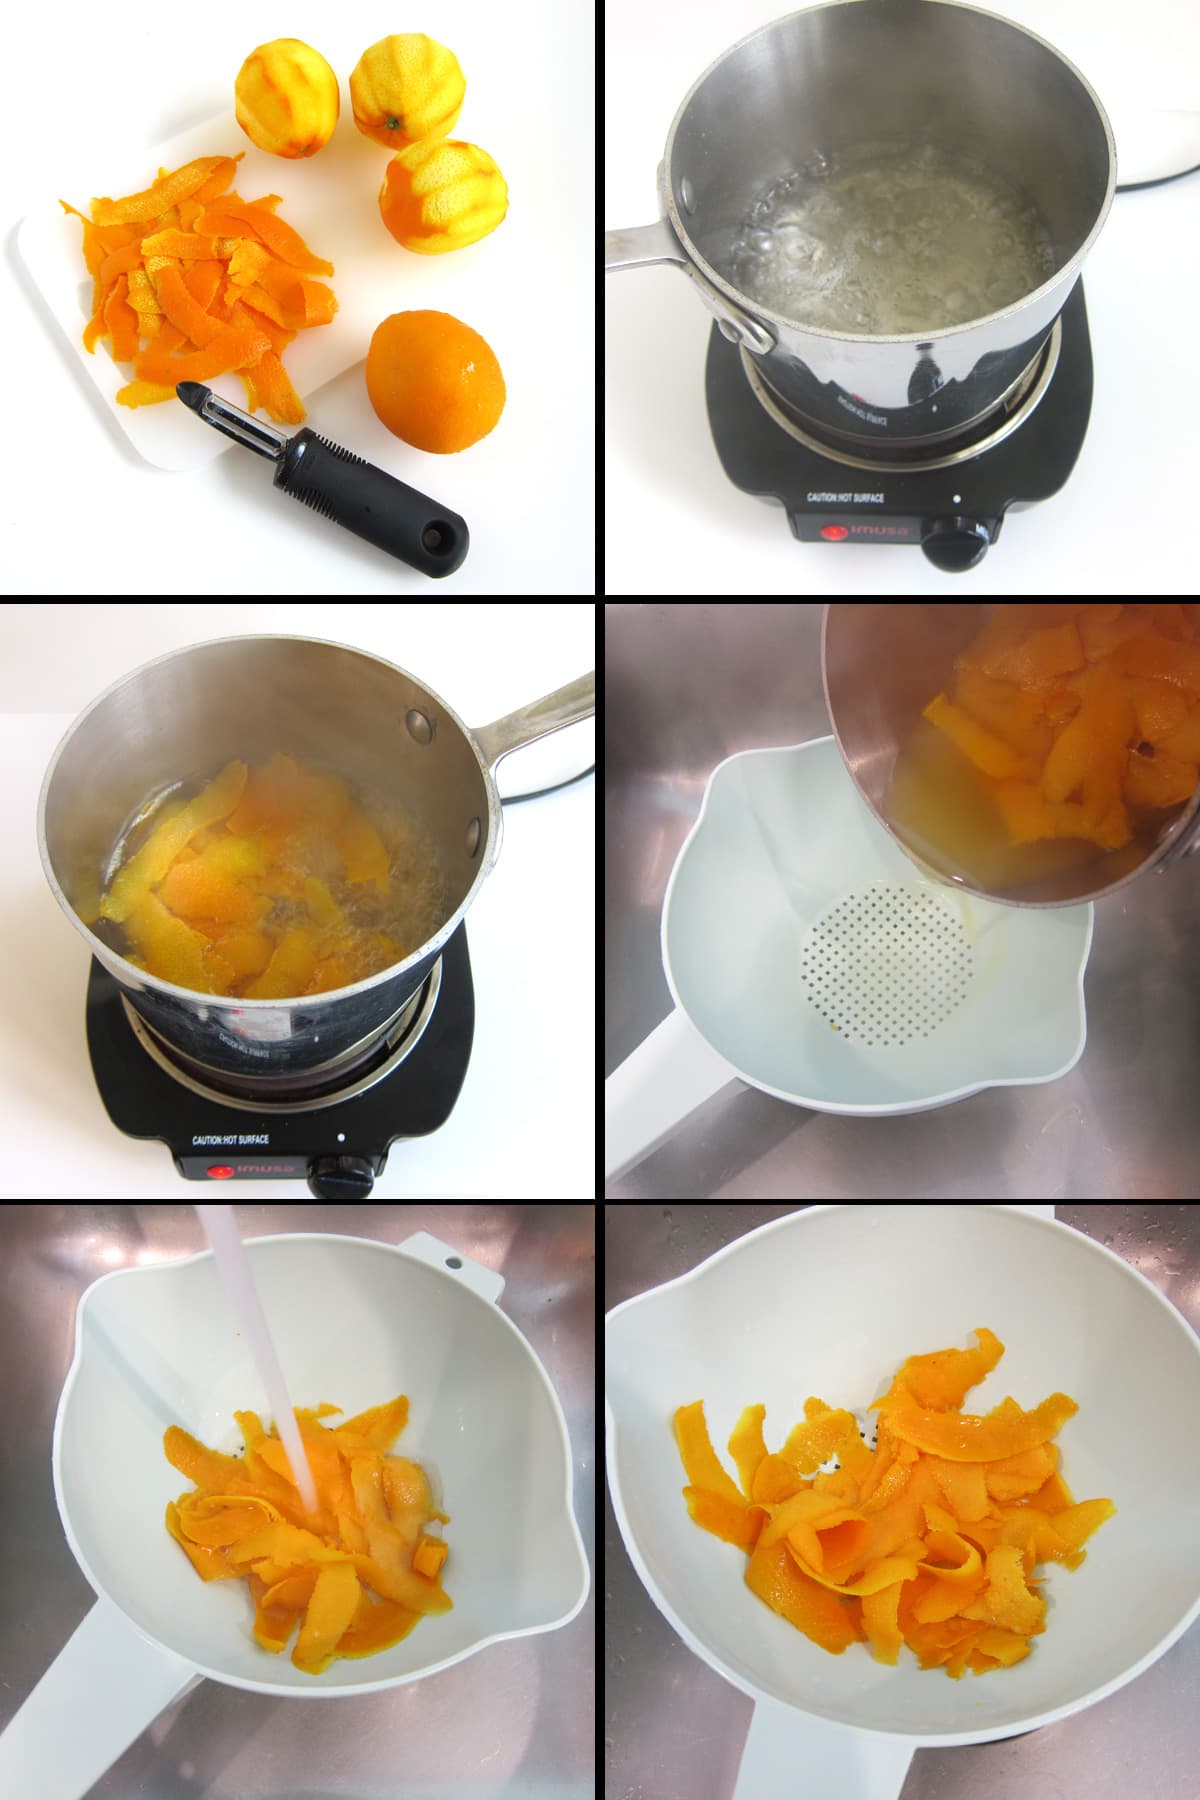 blanch orange peel in boiling water to prepare to make candied orange peel